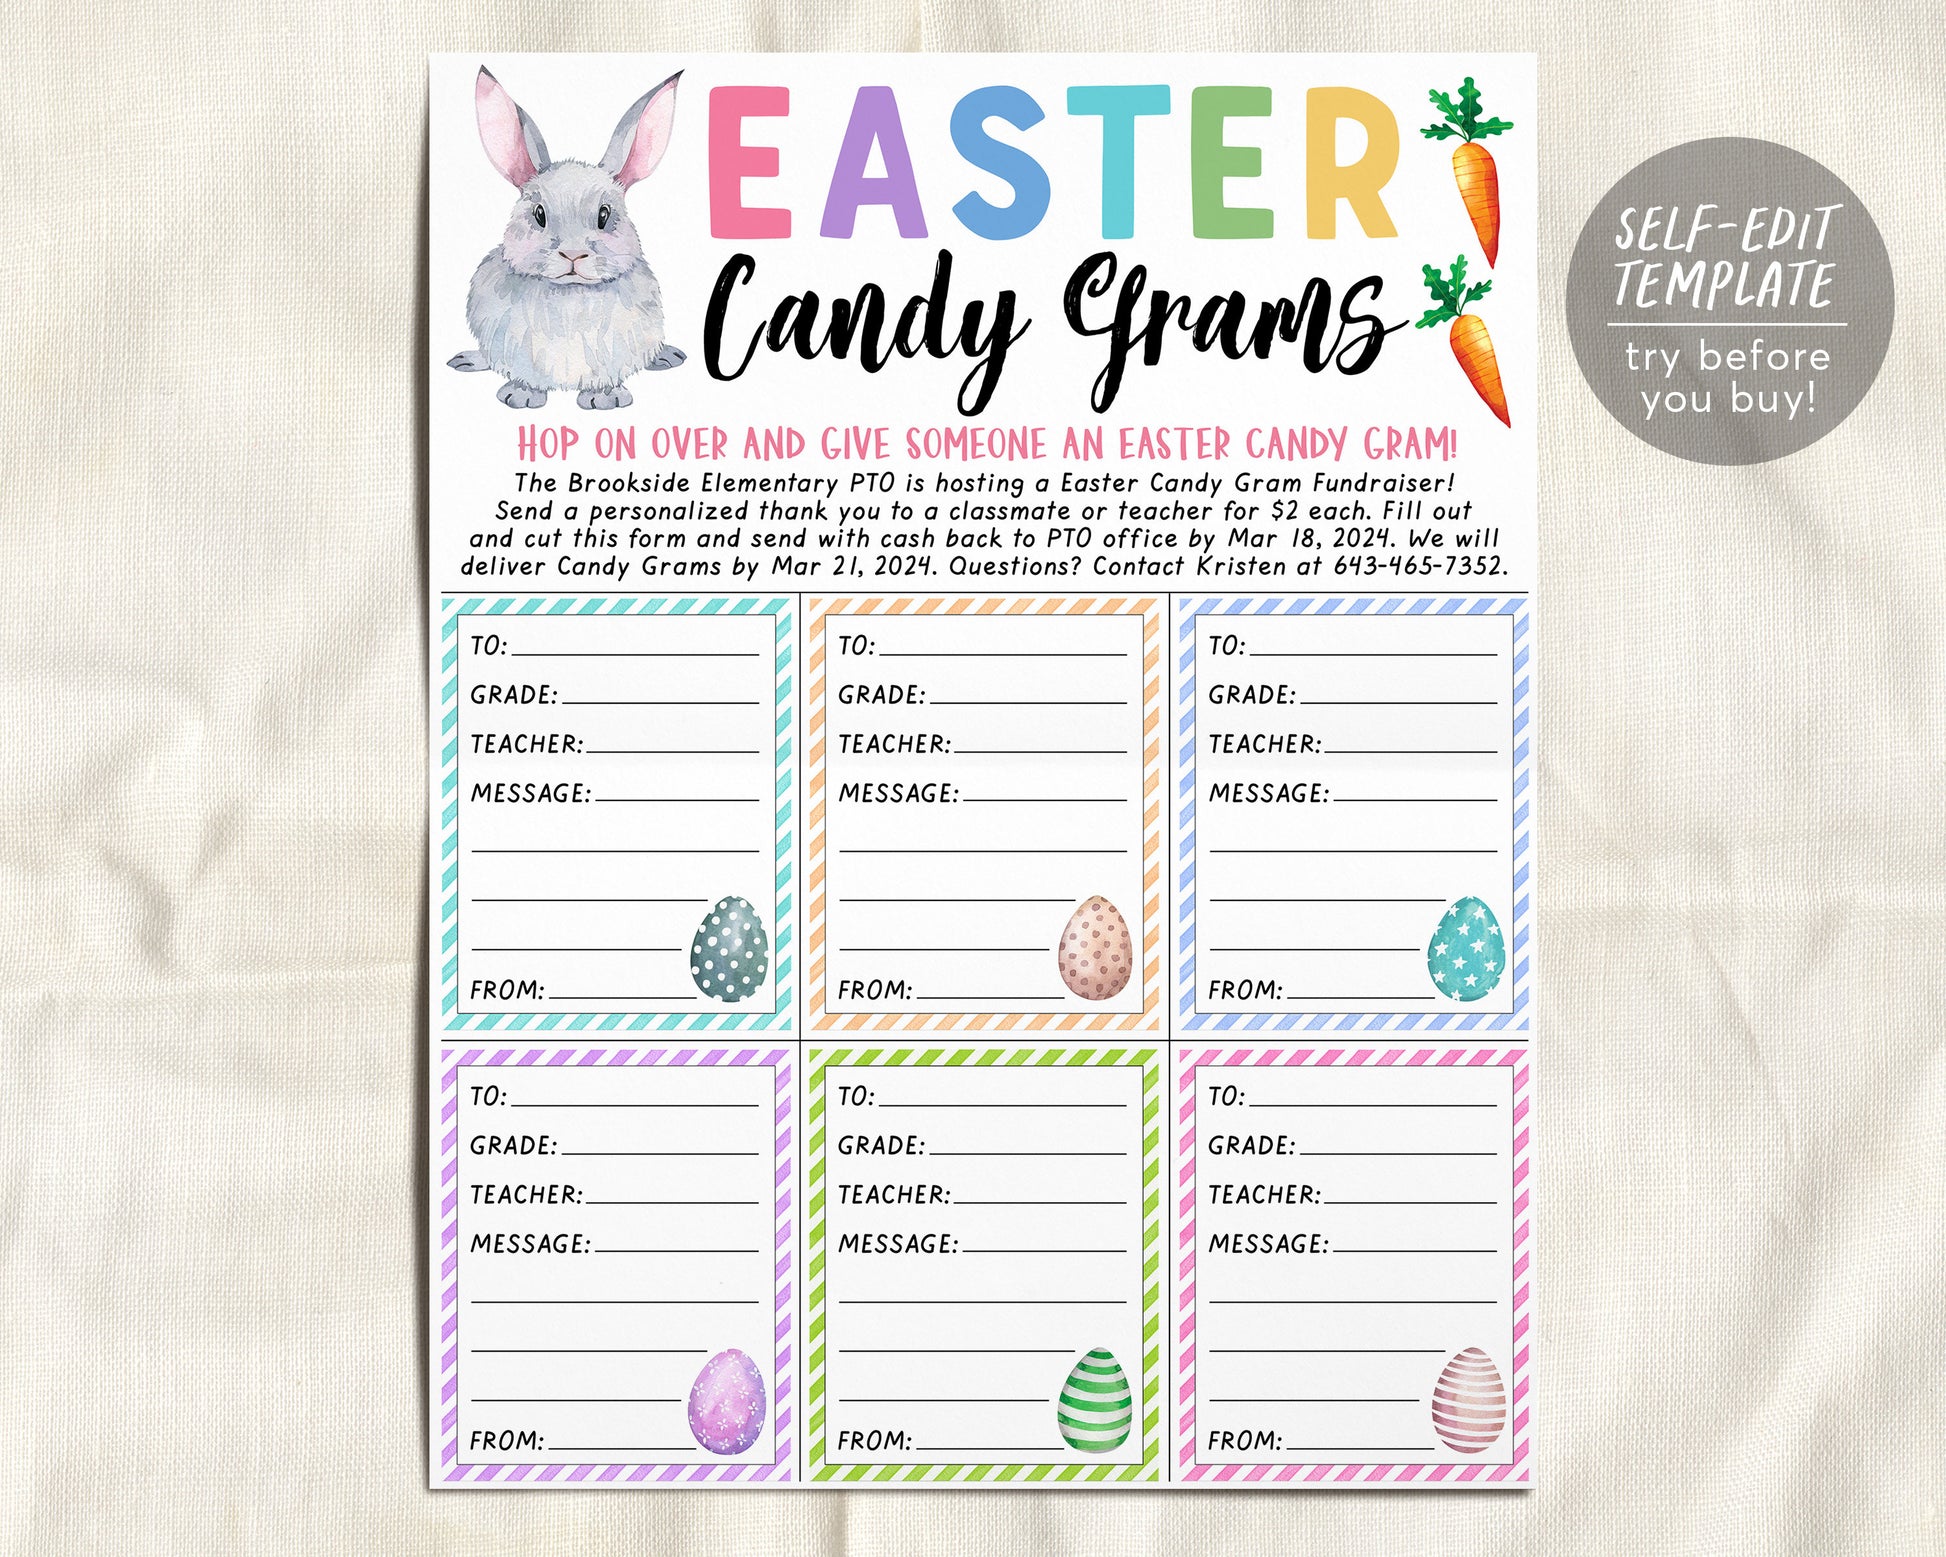 Easter Candy Gram Flyer Editable Template